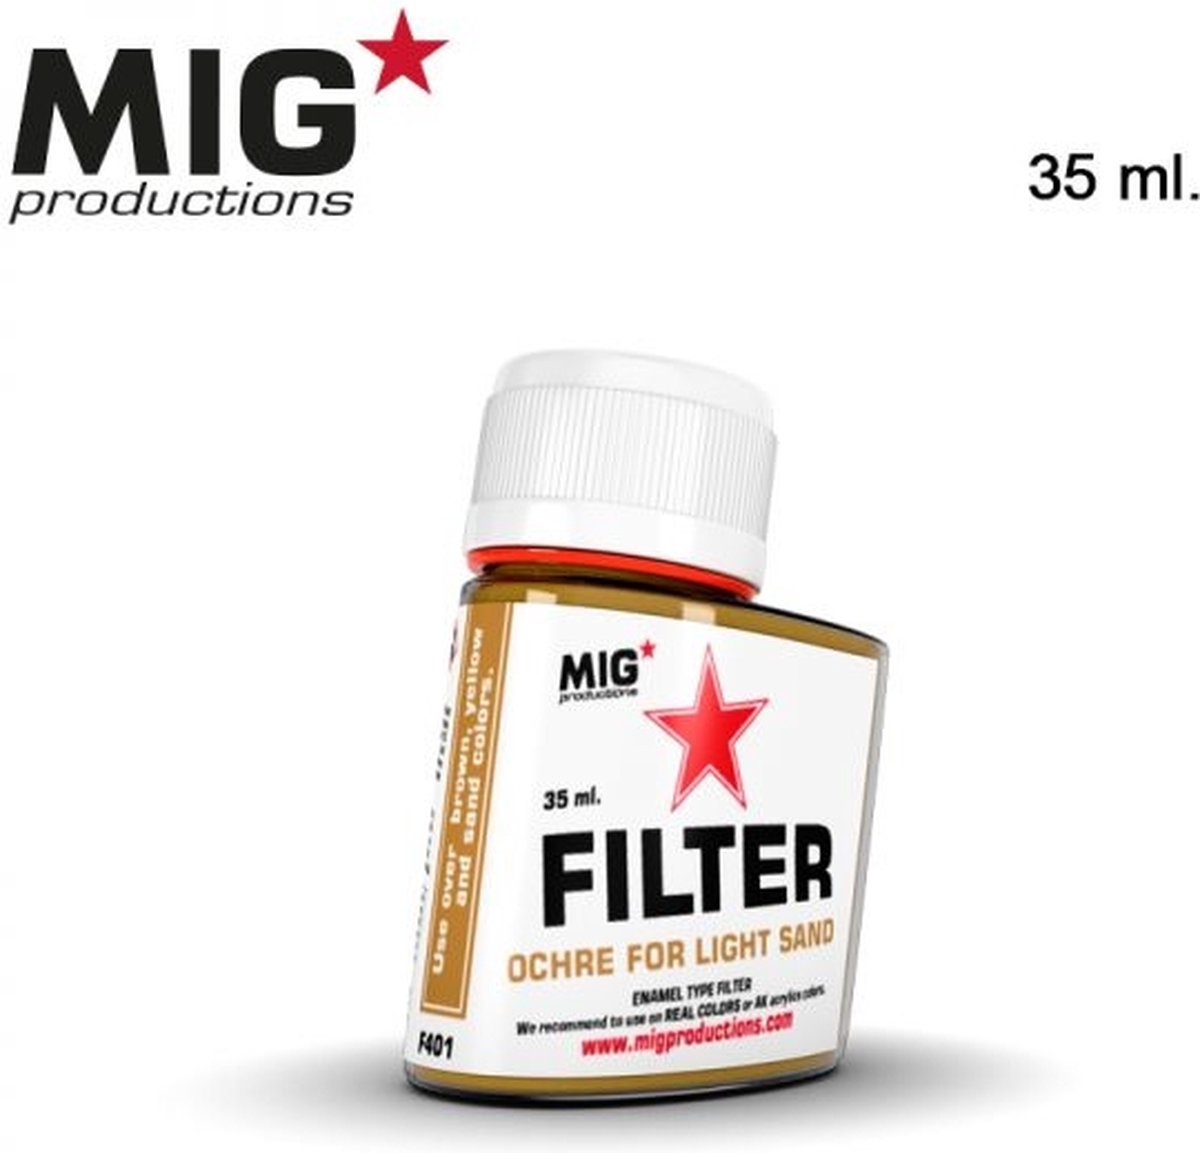 MIG Productions - F401- Ochre Filter for Light Sand - 35ml -